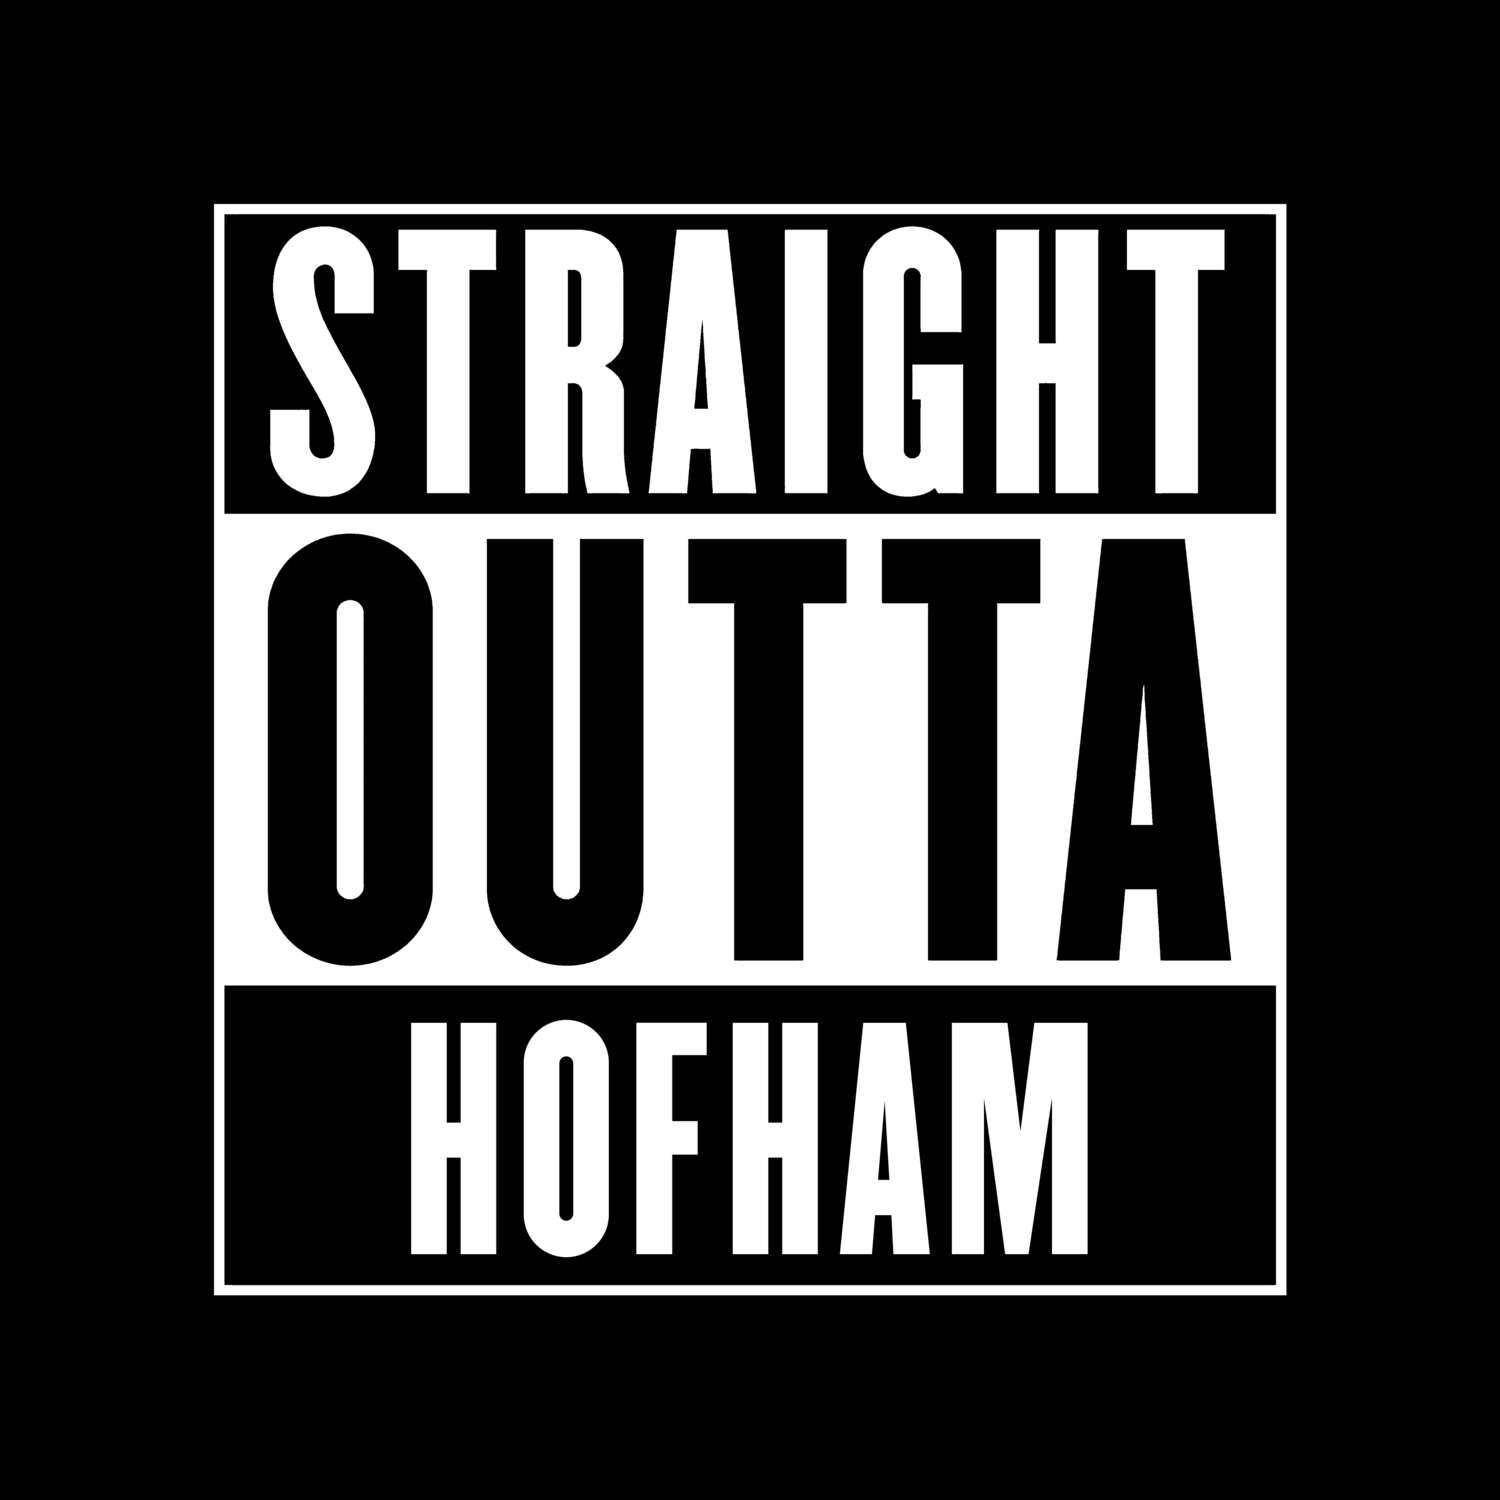 Hofham T-Shirt »Straight Outta«